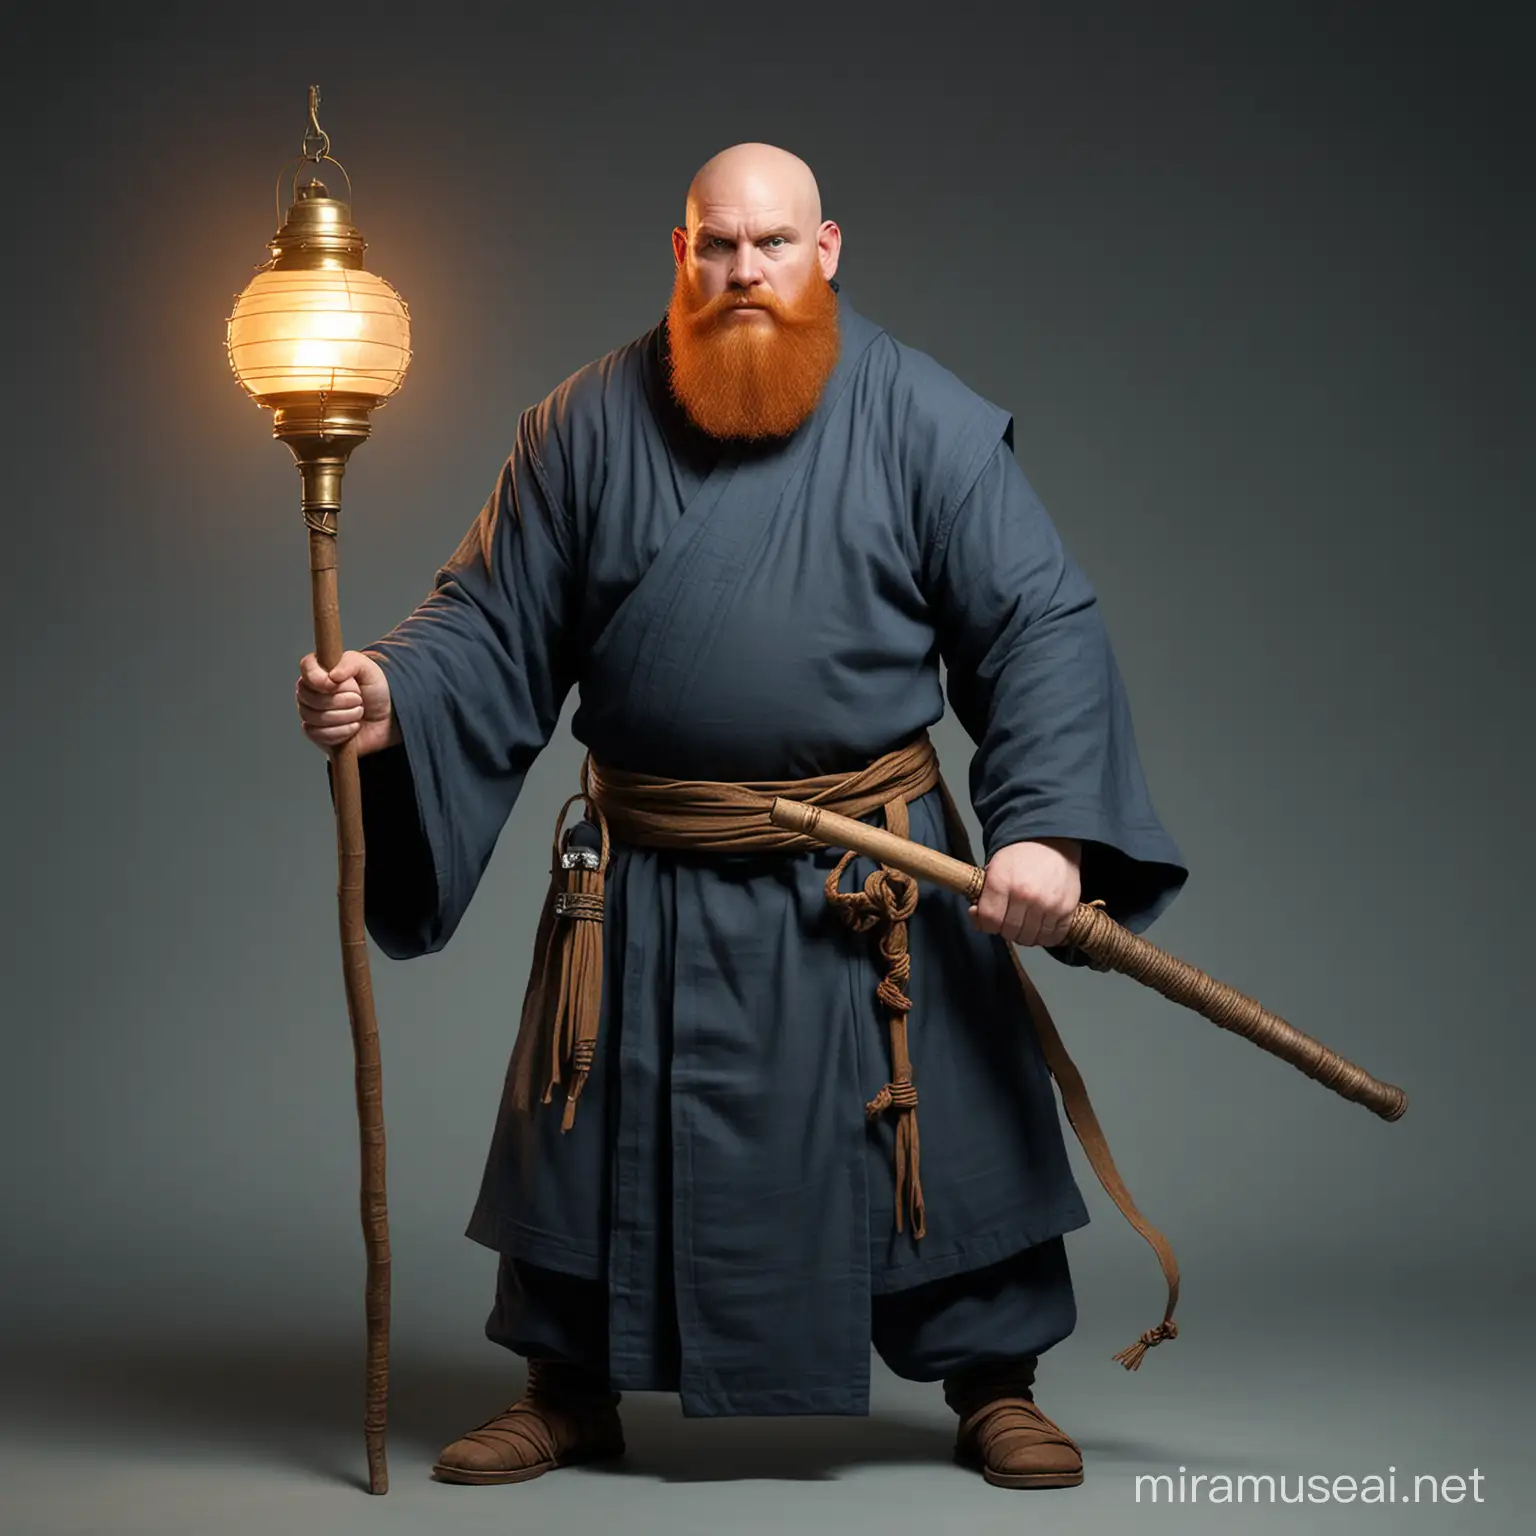 Monk in Vigil Bald Bearded Figure Holds Quarterstaff and Lantern